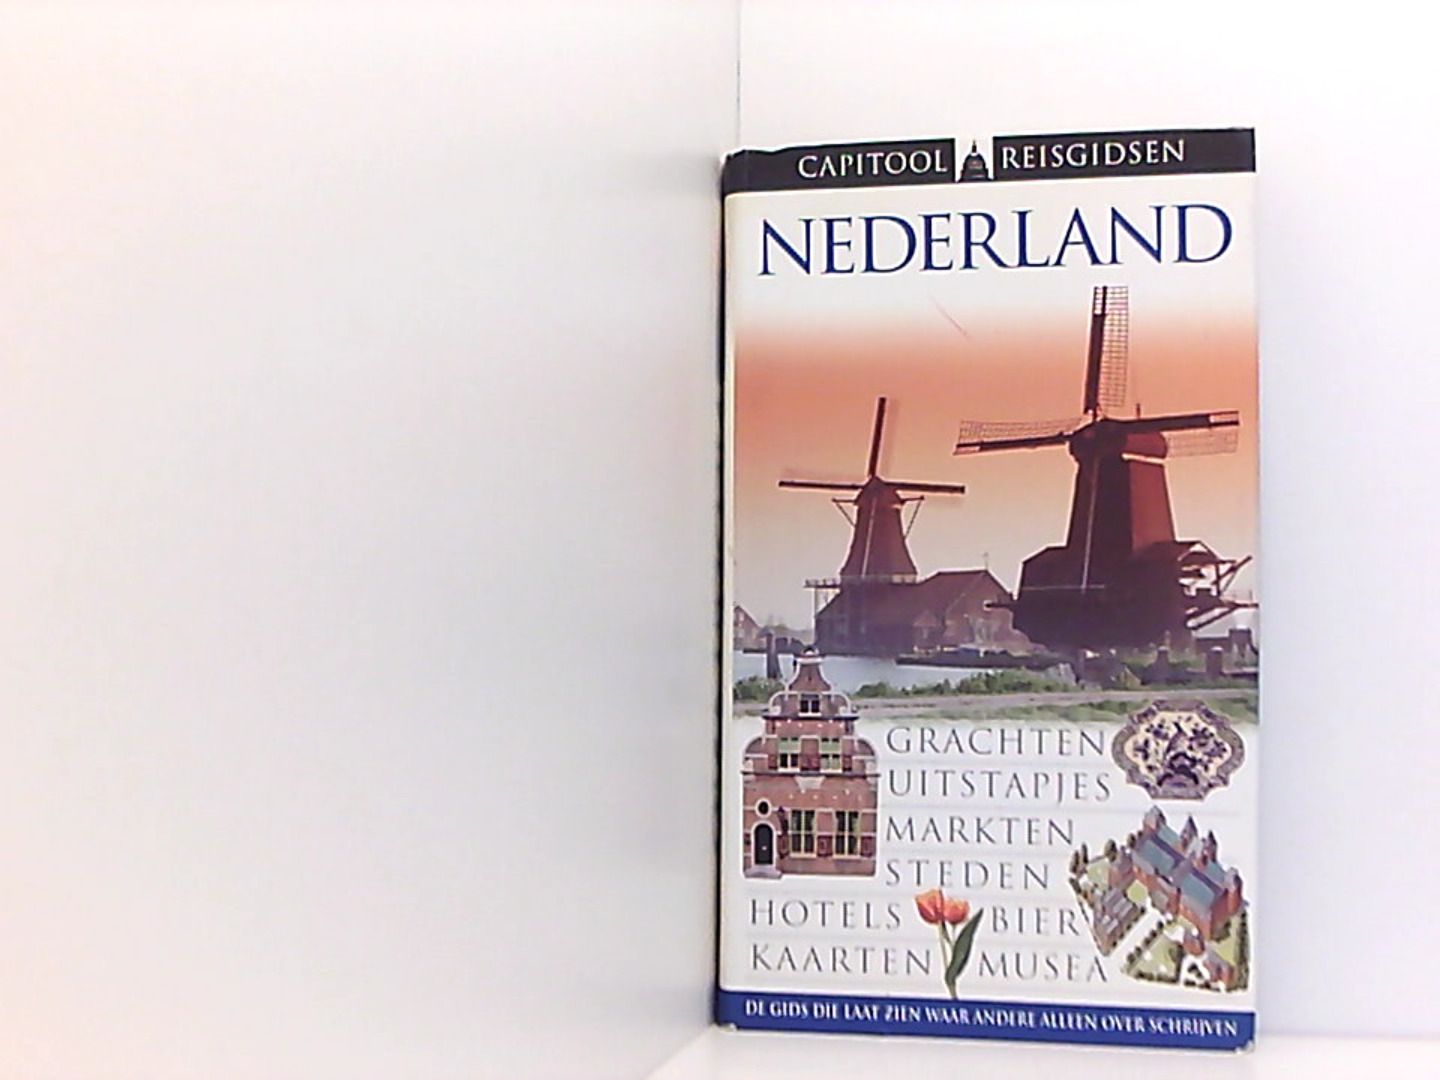 Nederland (Capitool reisgidsen) - Harmans Gerard, M.L.